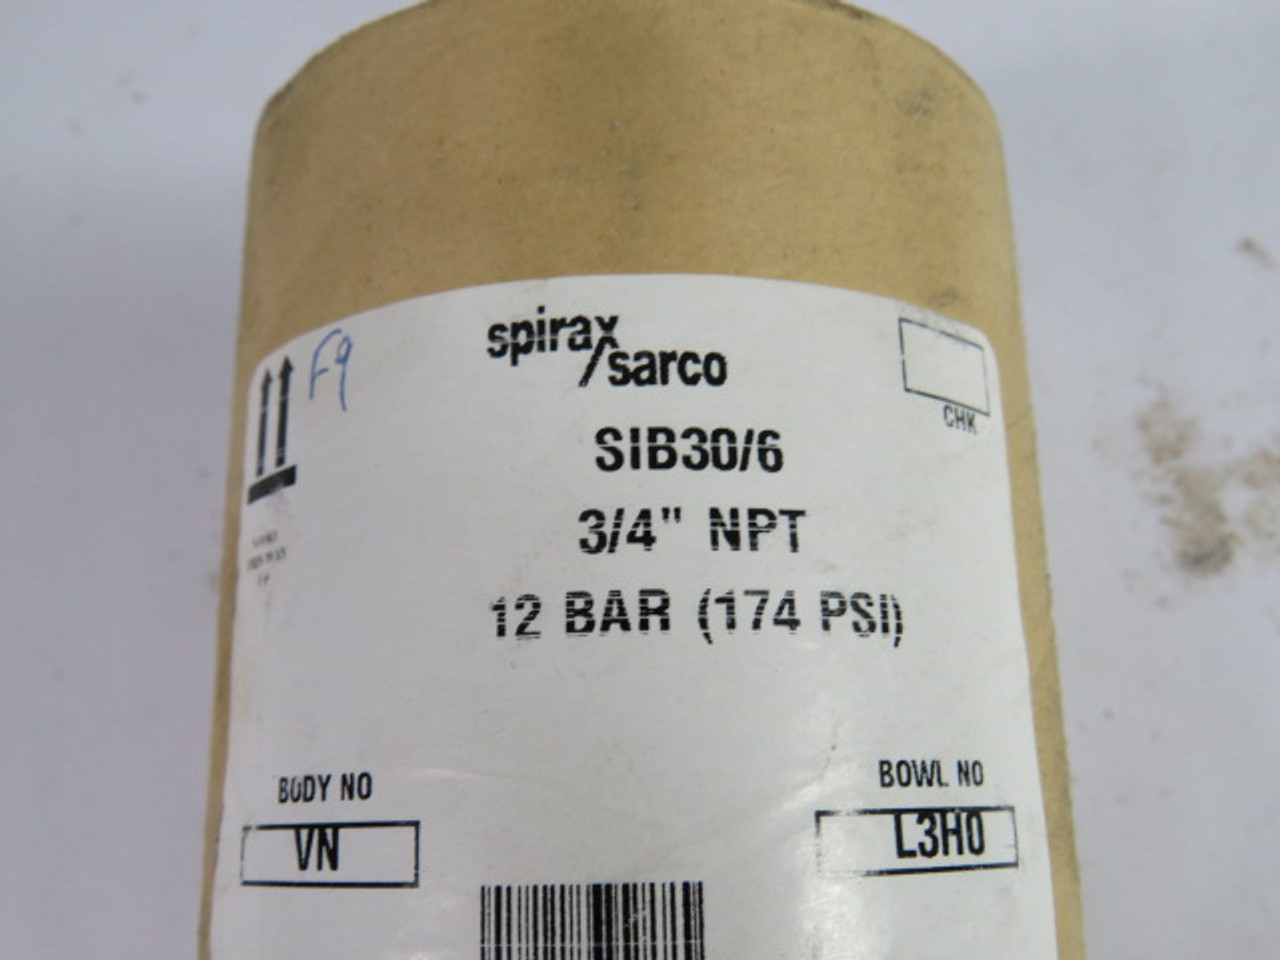 Spirax SIB30/6 Stainless Steel Inverted Bucket Trap 3/4" NPT 12 BAR USED